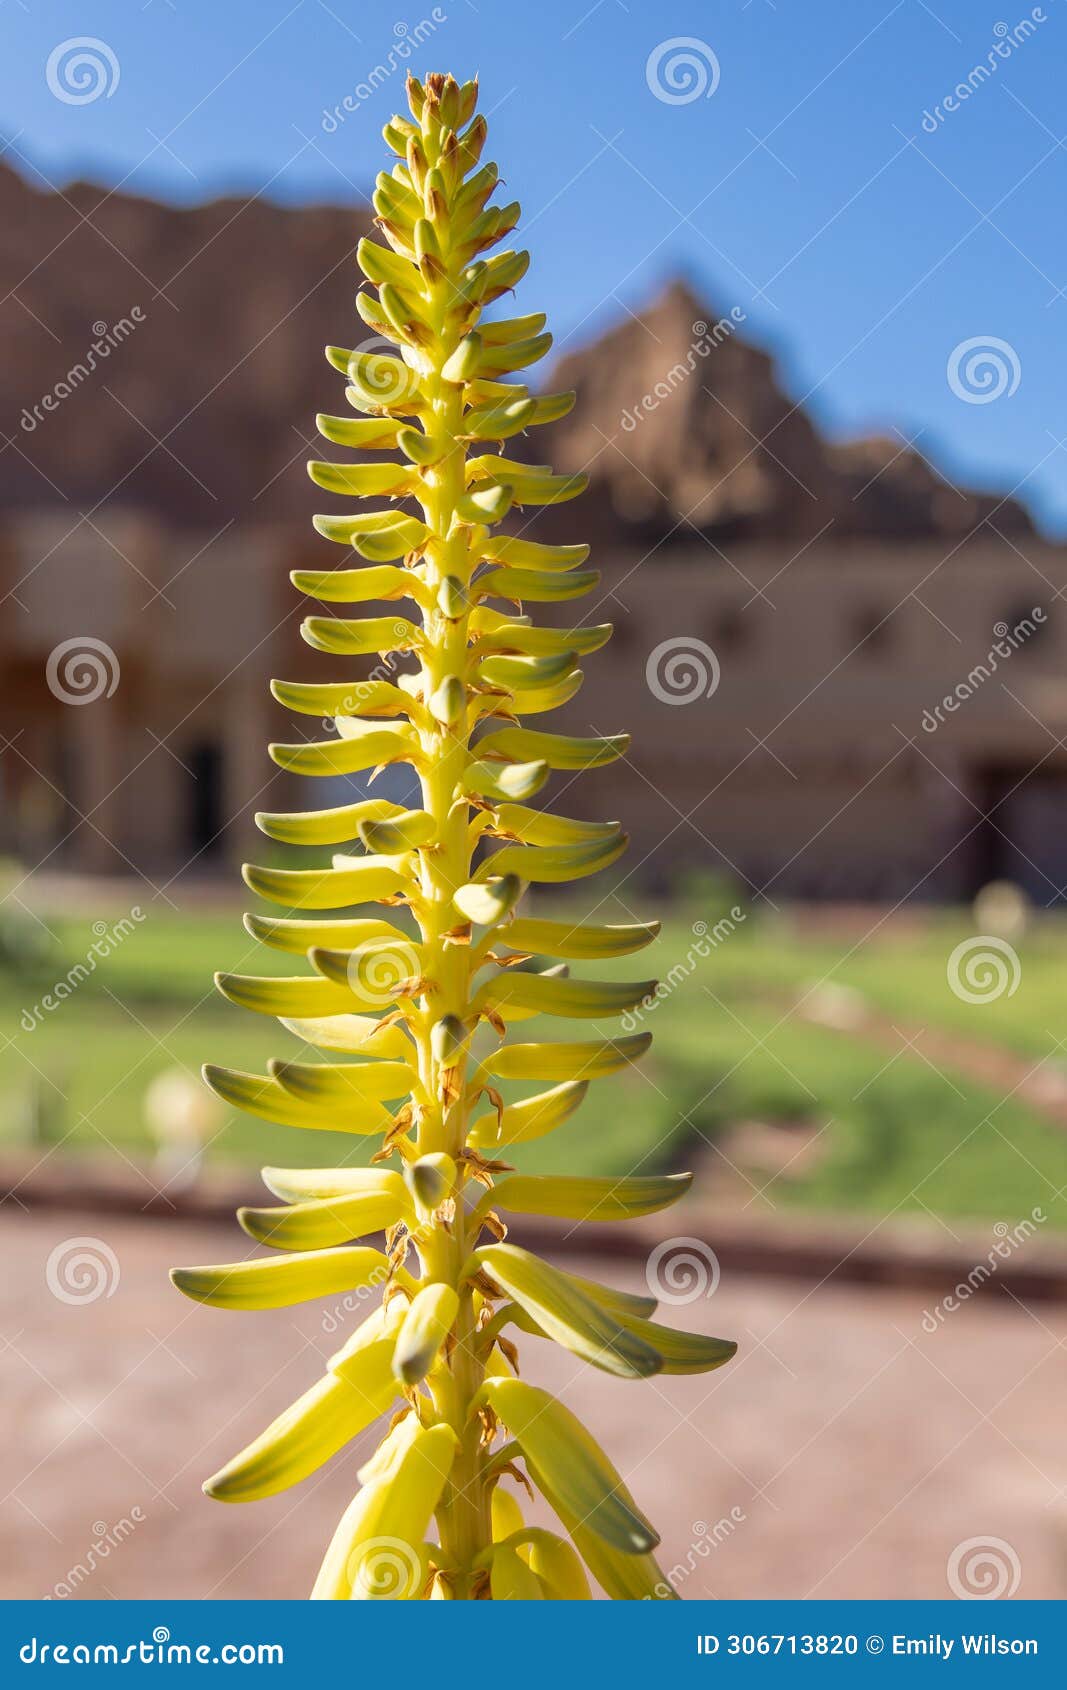 flowering plant in the desert near al-ula